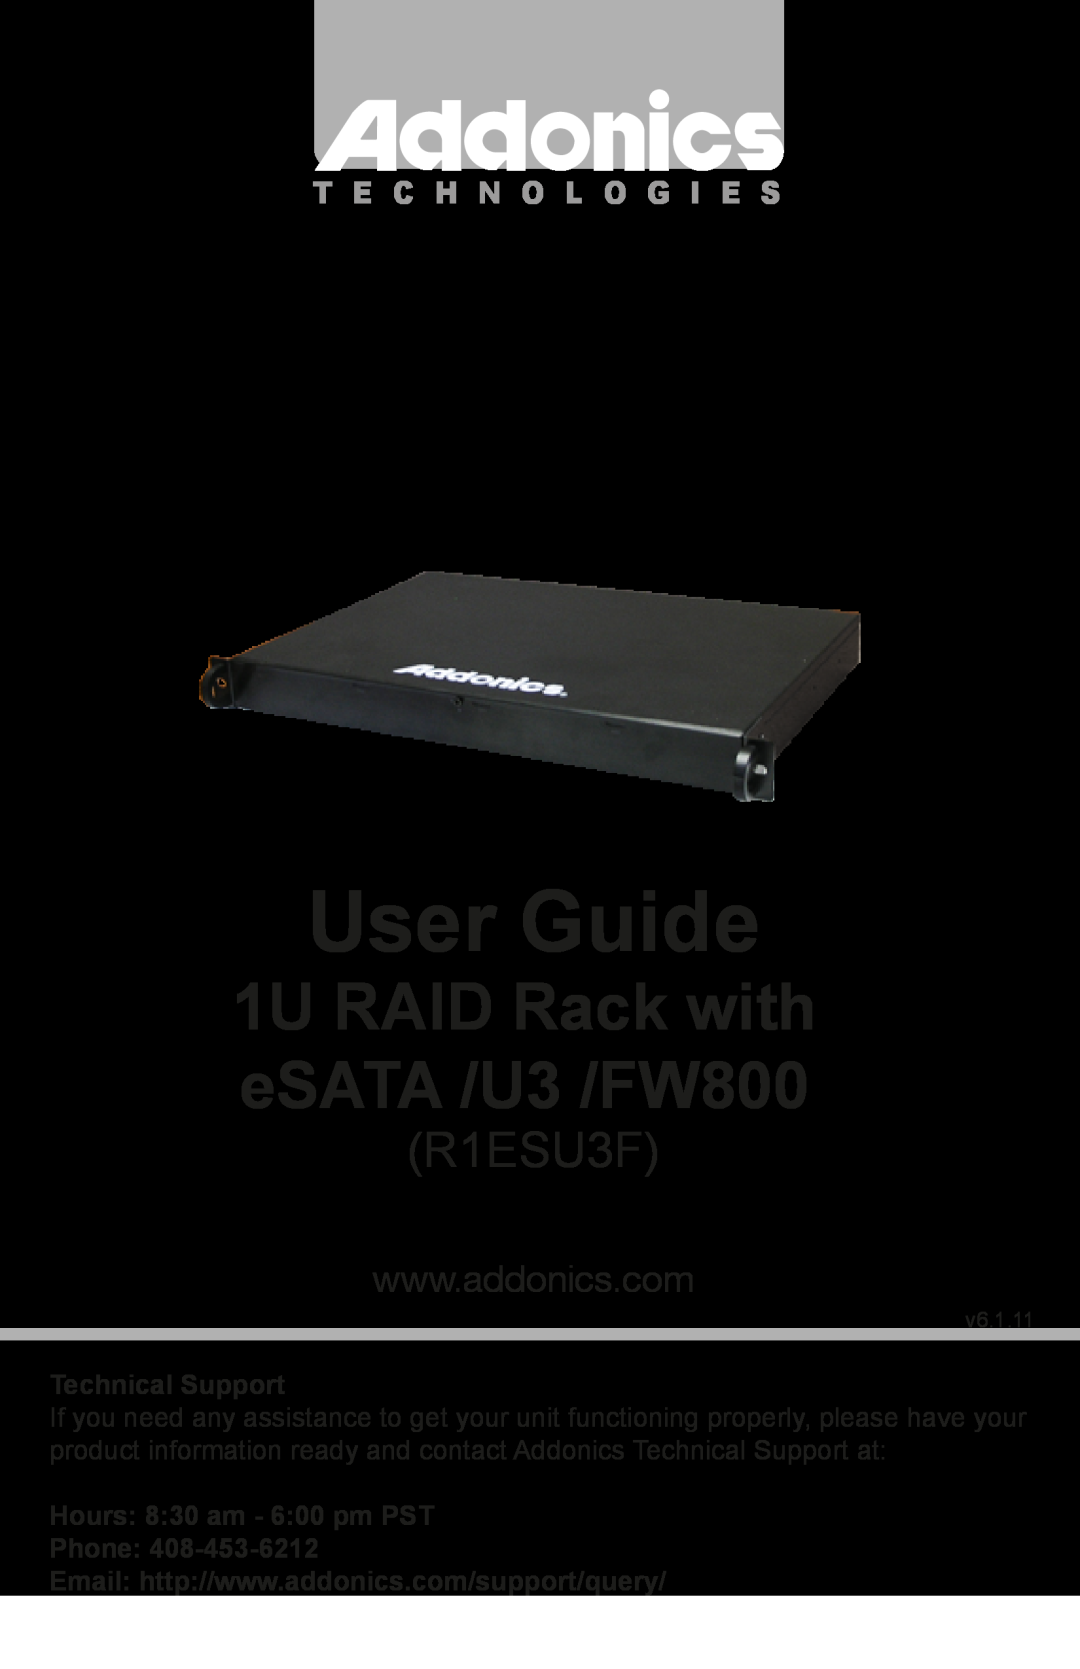 Addonics Technologies R1ESU3F manual User Guide, 1U RAID Rack with eSATA /U3 /FW800, T E C H N O L O G I E S, v6.1.11 